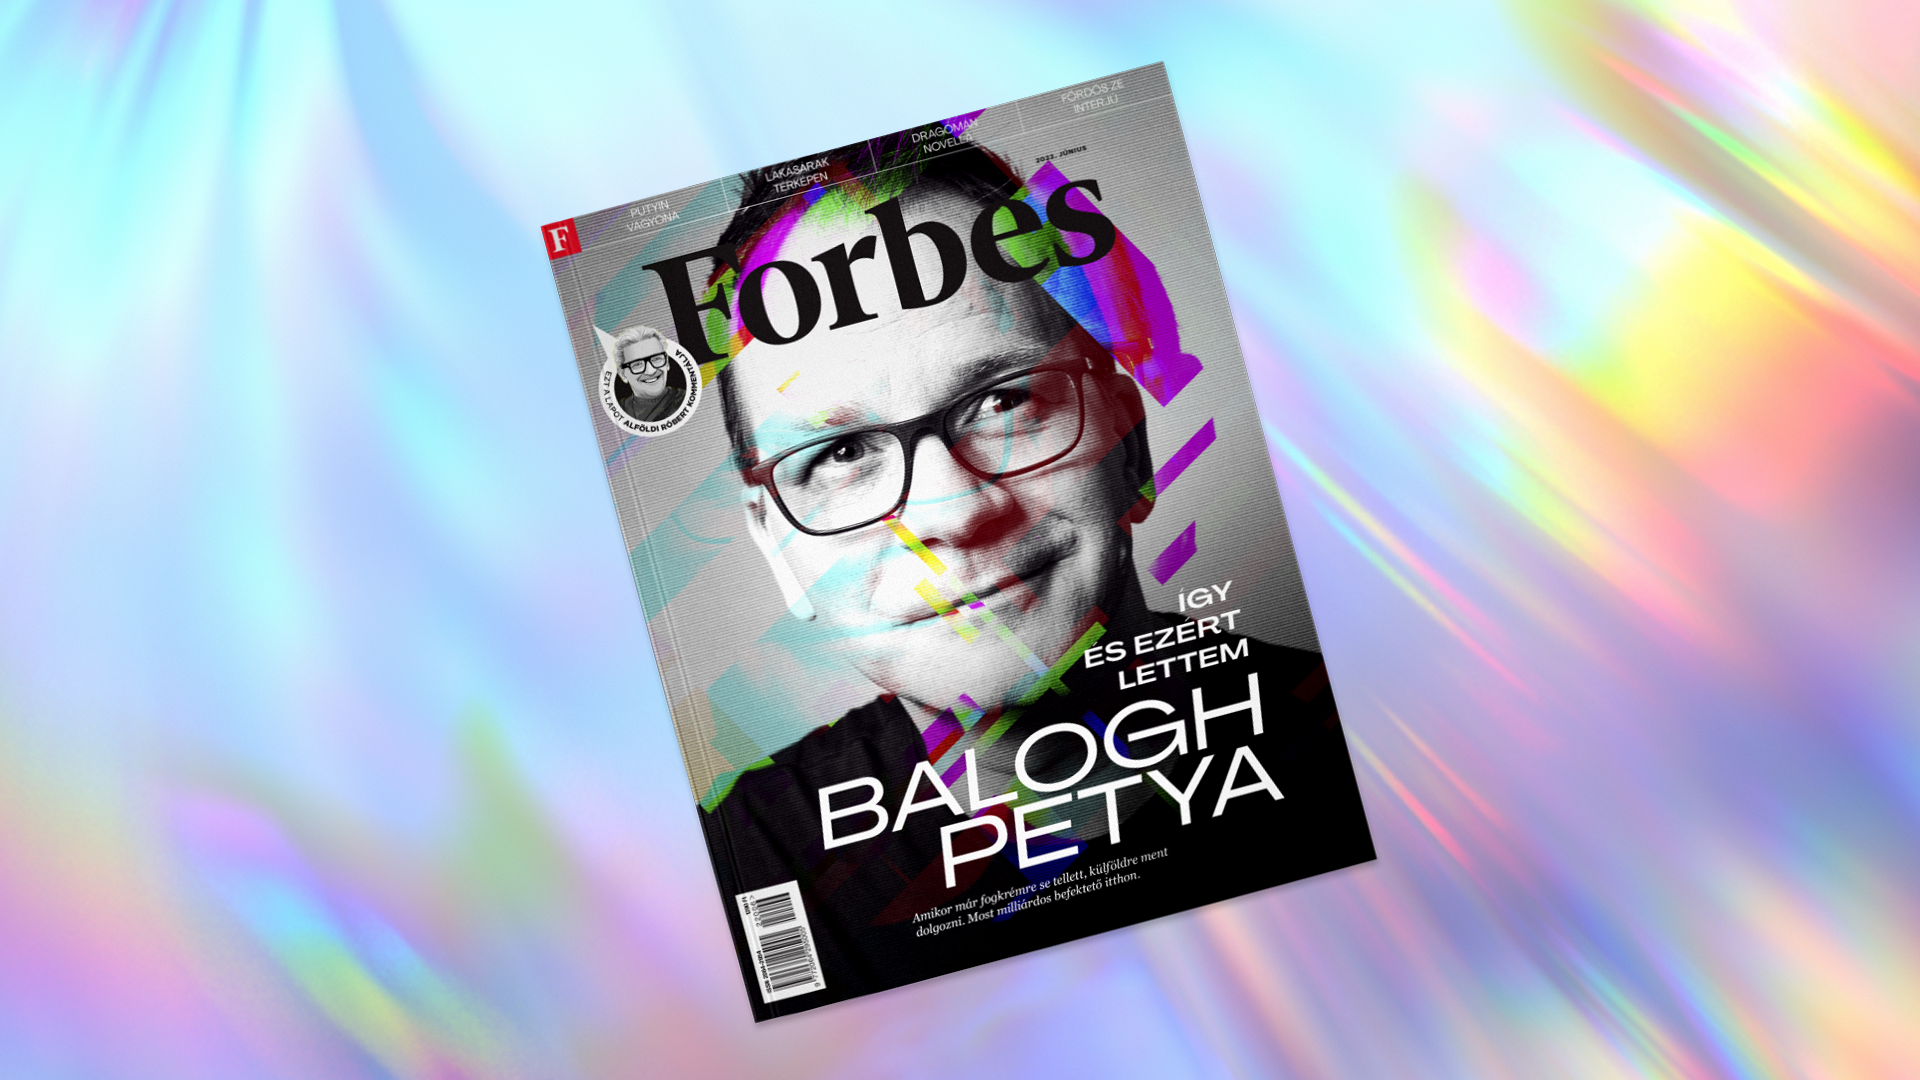 Alföldi, Balogh Petya, Dragomán, Jókuti: mutatjuk, mit tud a megújult Forbes magazin